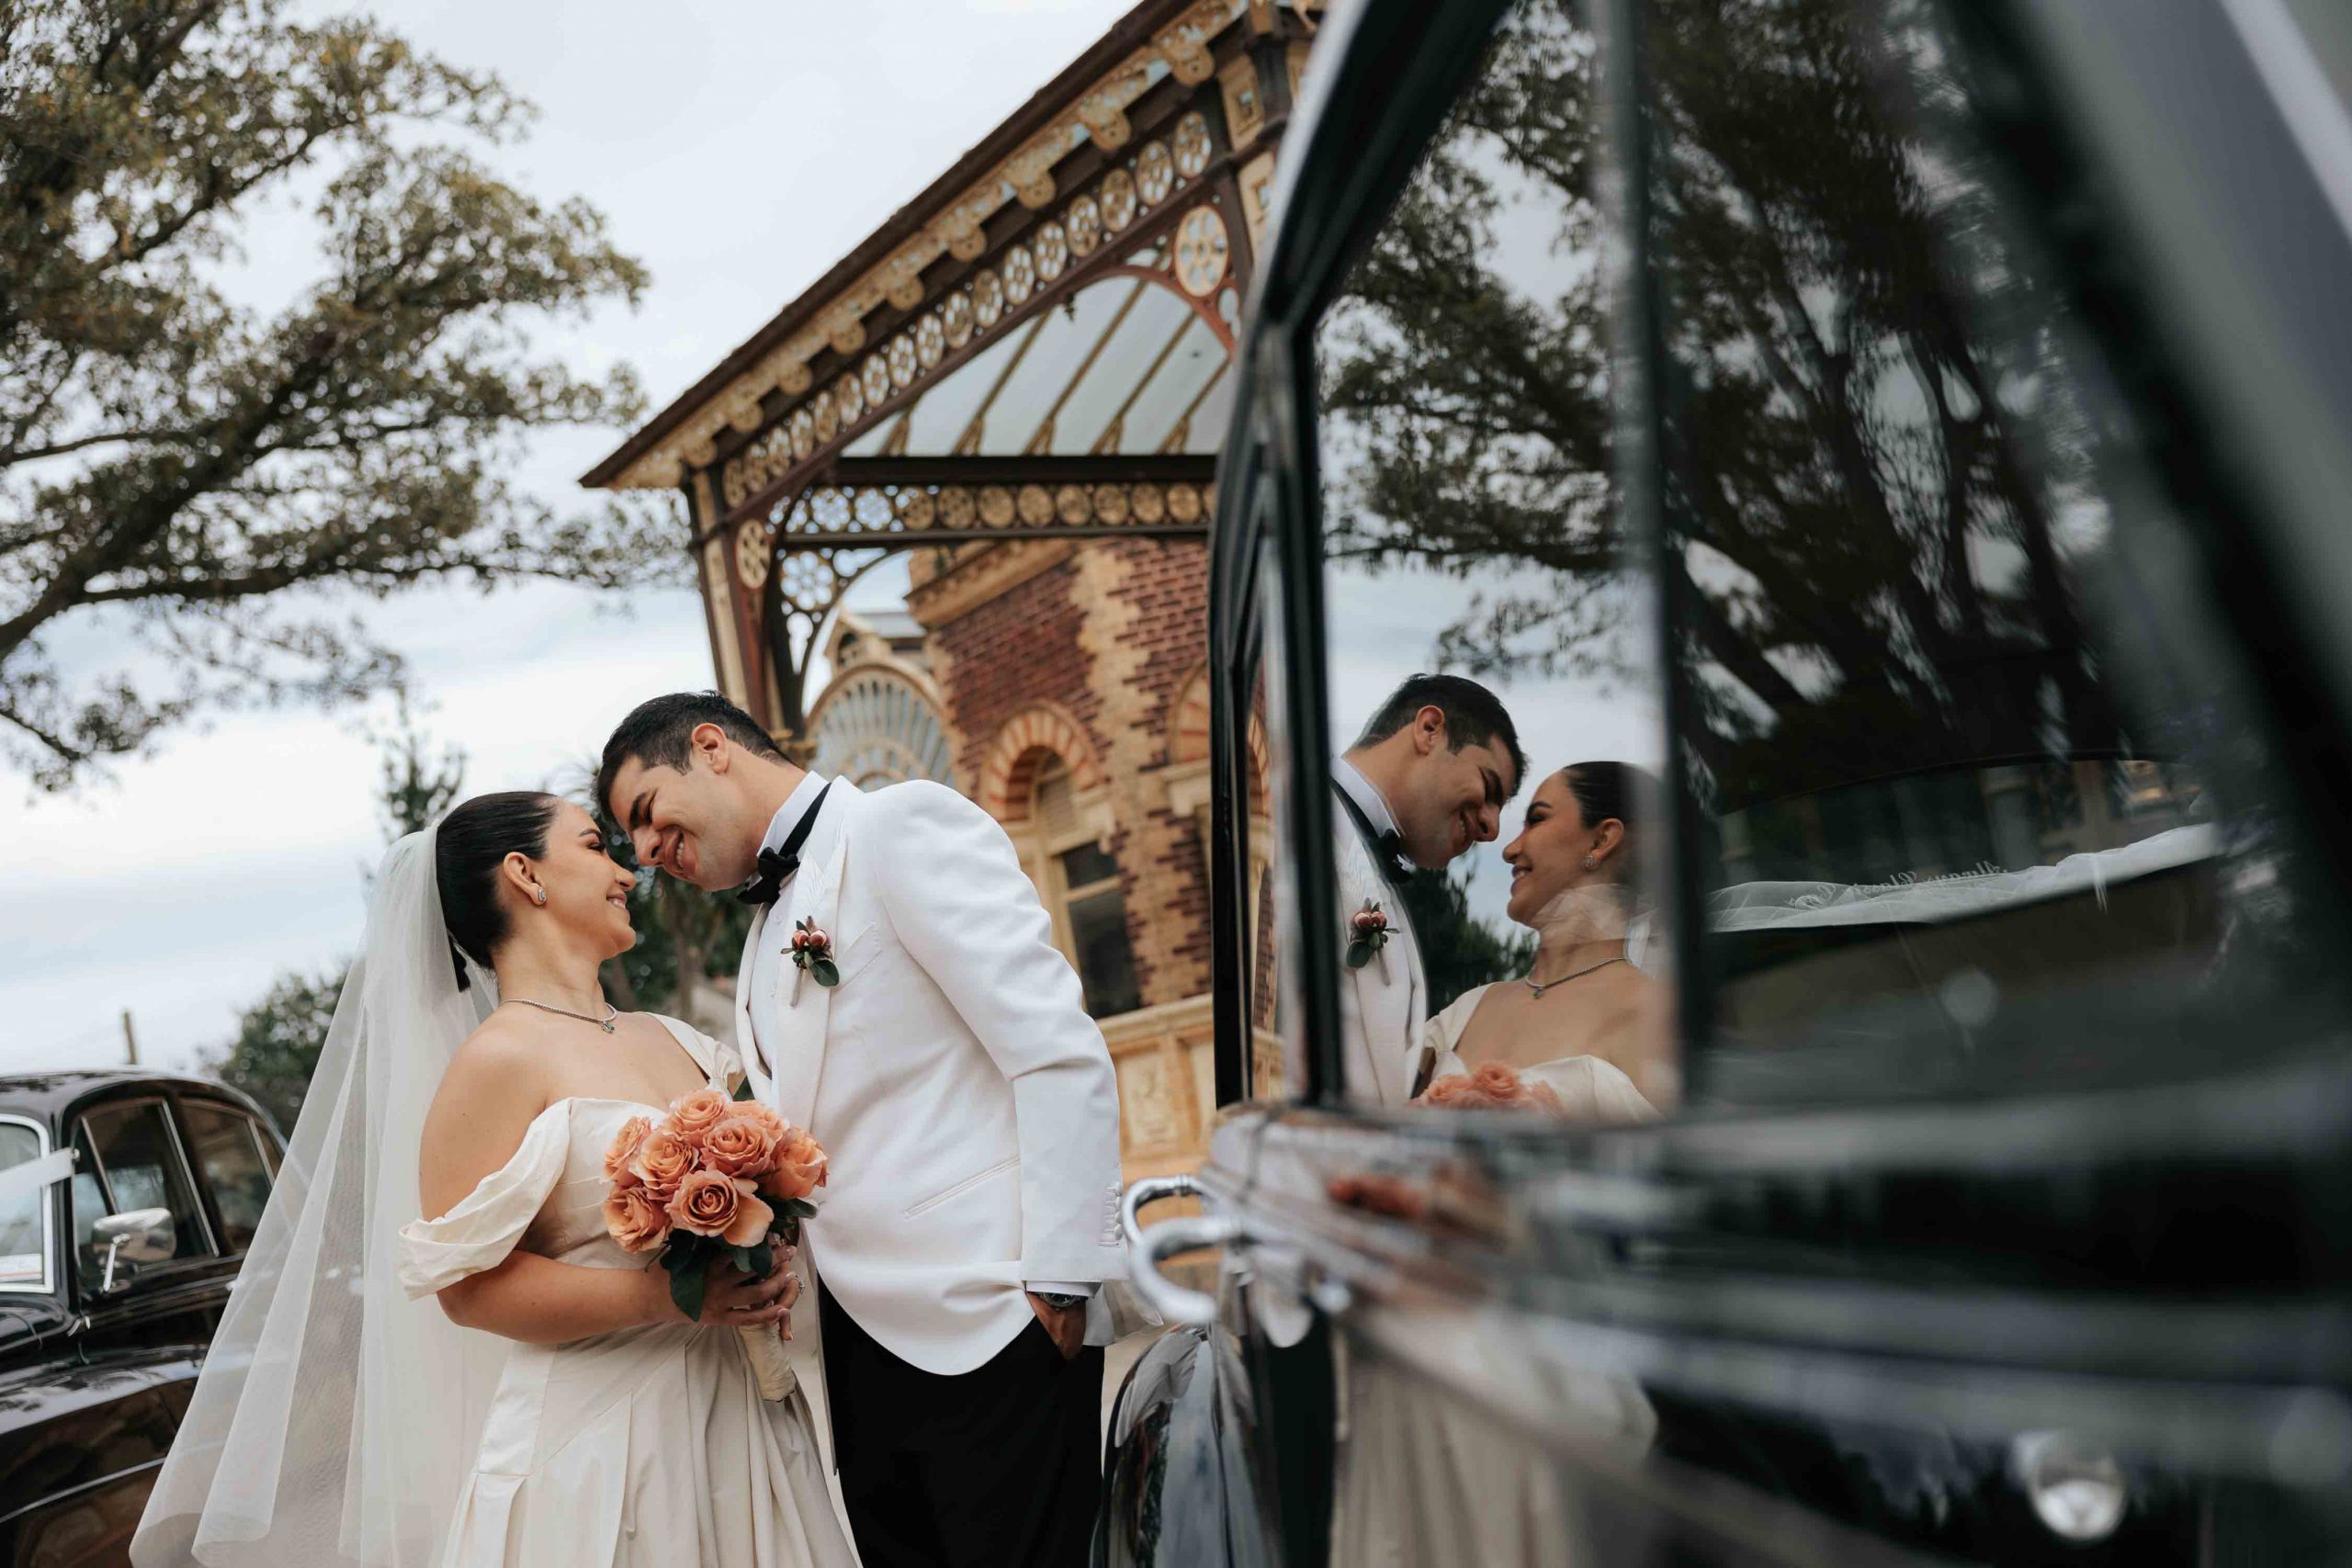 Melbourne Wedding , Melbourne Wedding Photography, Melbourne Wedding Venue , Melbourne Wedding Photographer